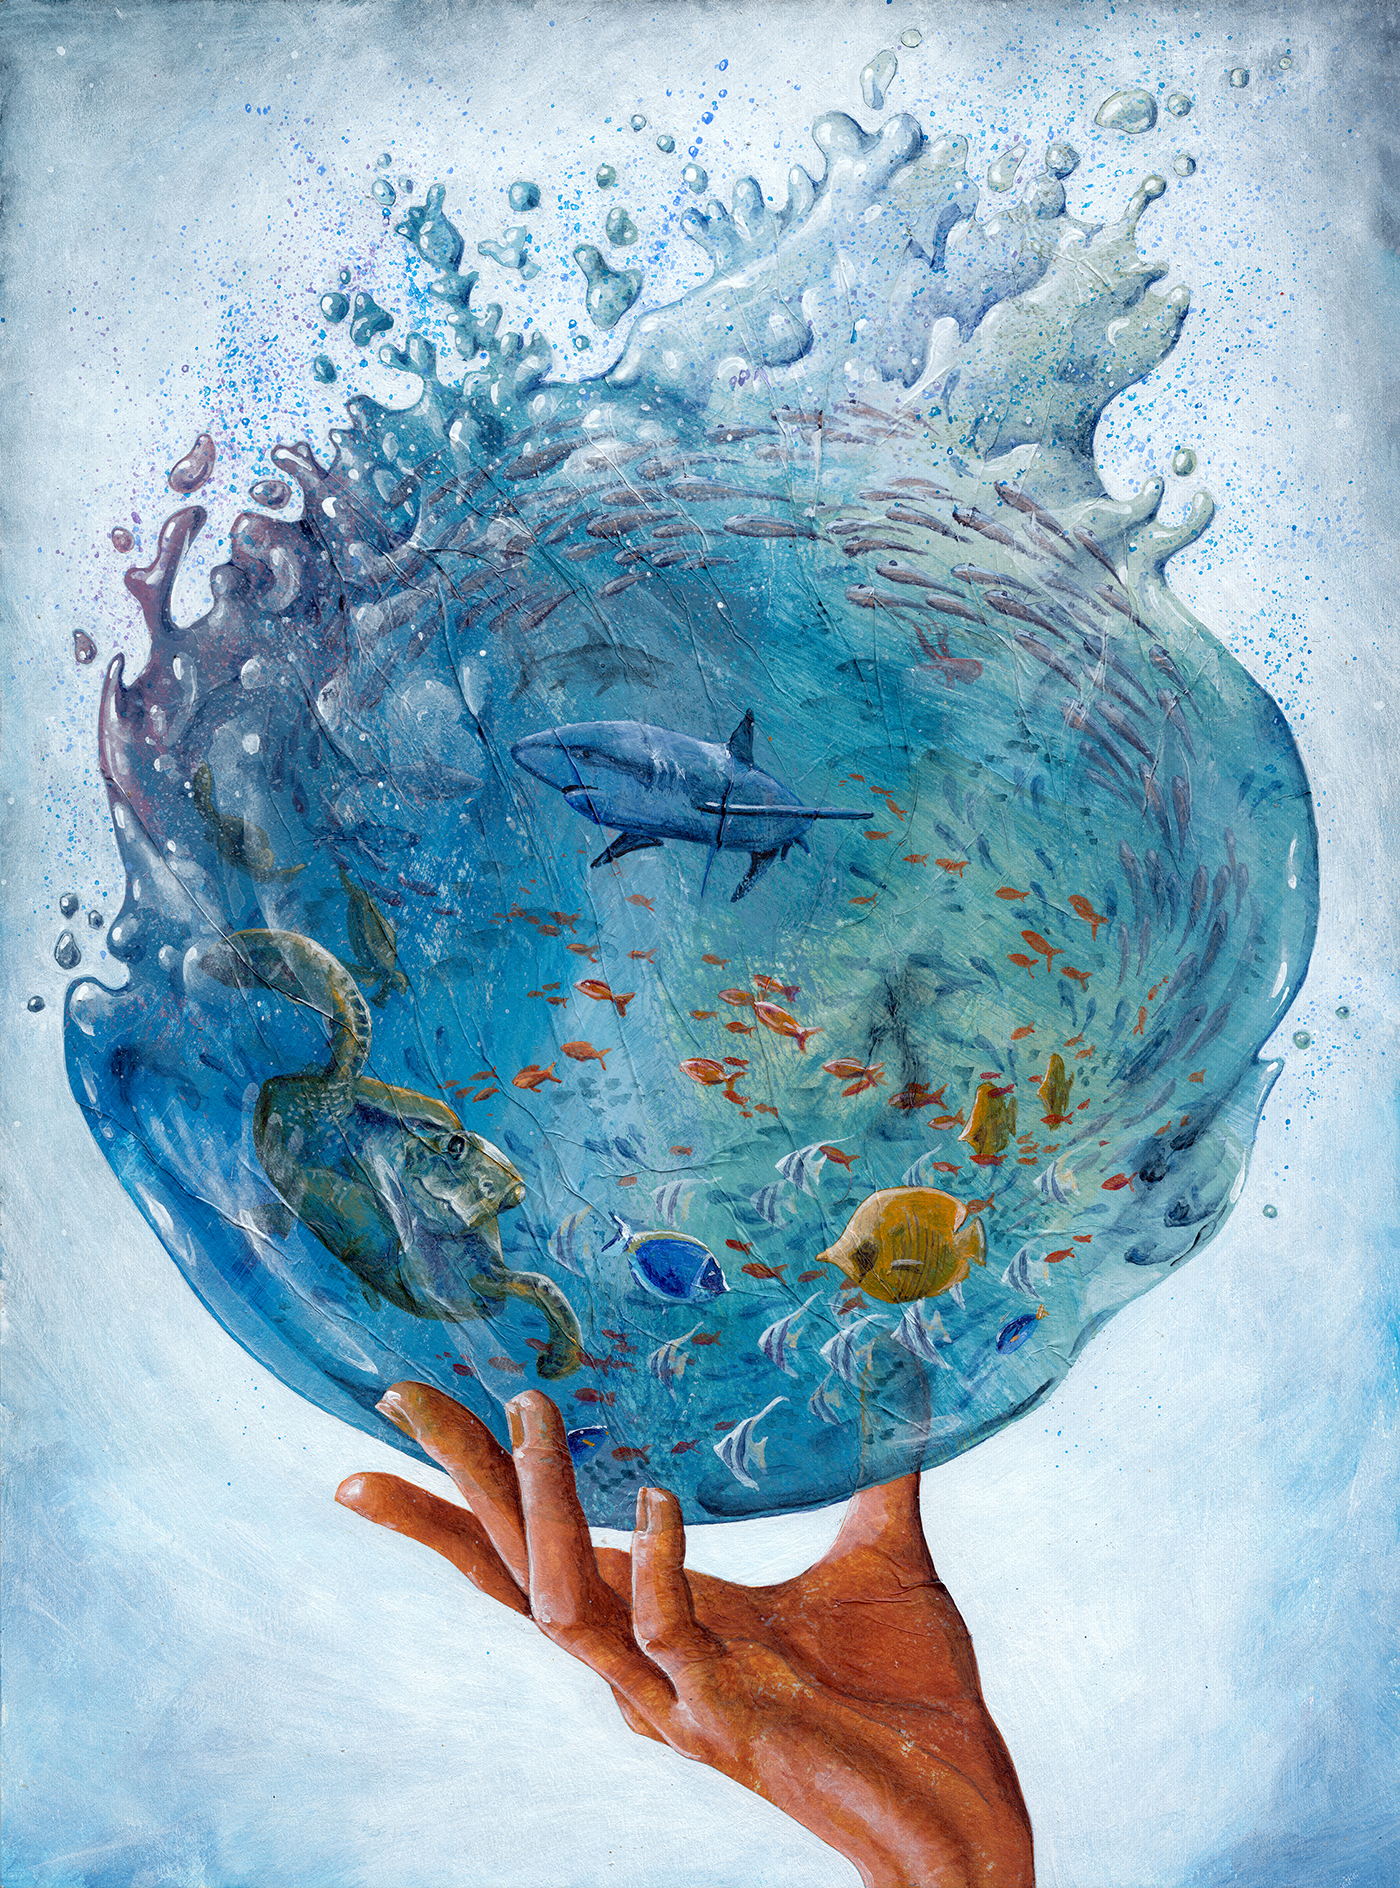 book review book illustration environmentalism conservation Ocean sea turtle surrealism editoral illustration